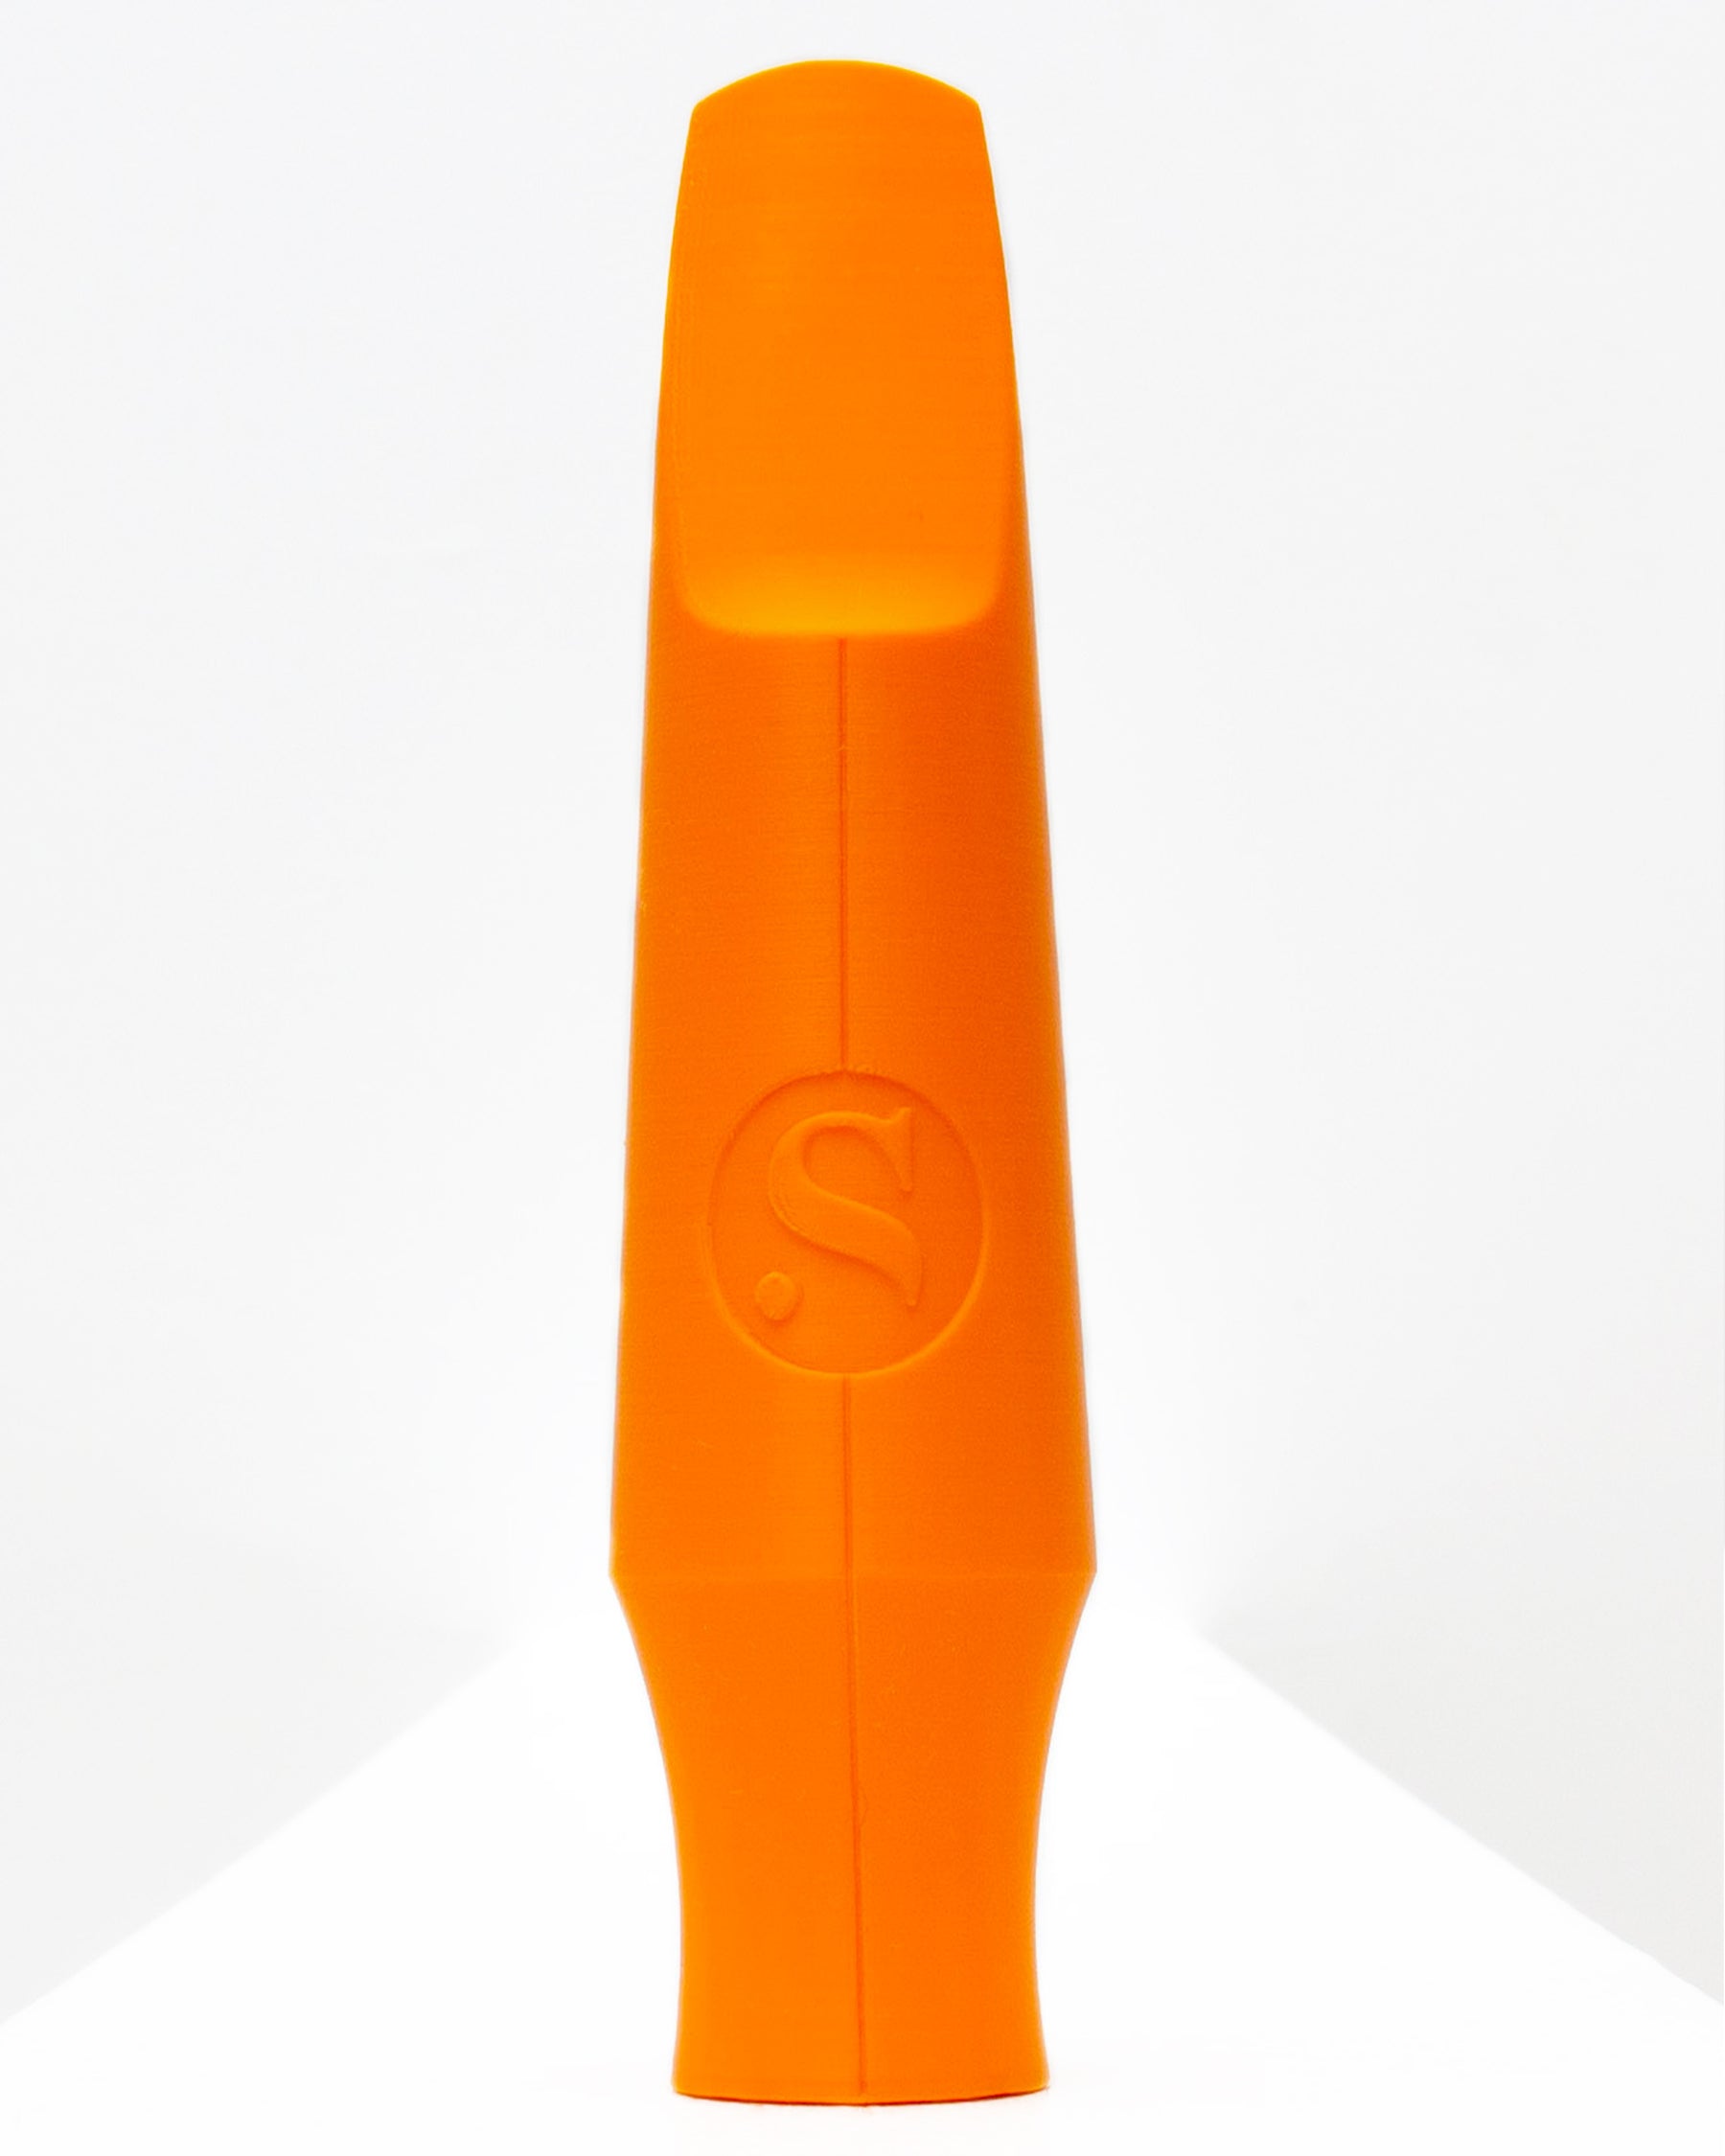 Baritone Signature Saxophone mouthpiece - Joe Trahan by Syos - 10 / Lava Orange